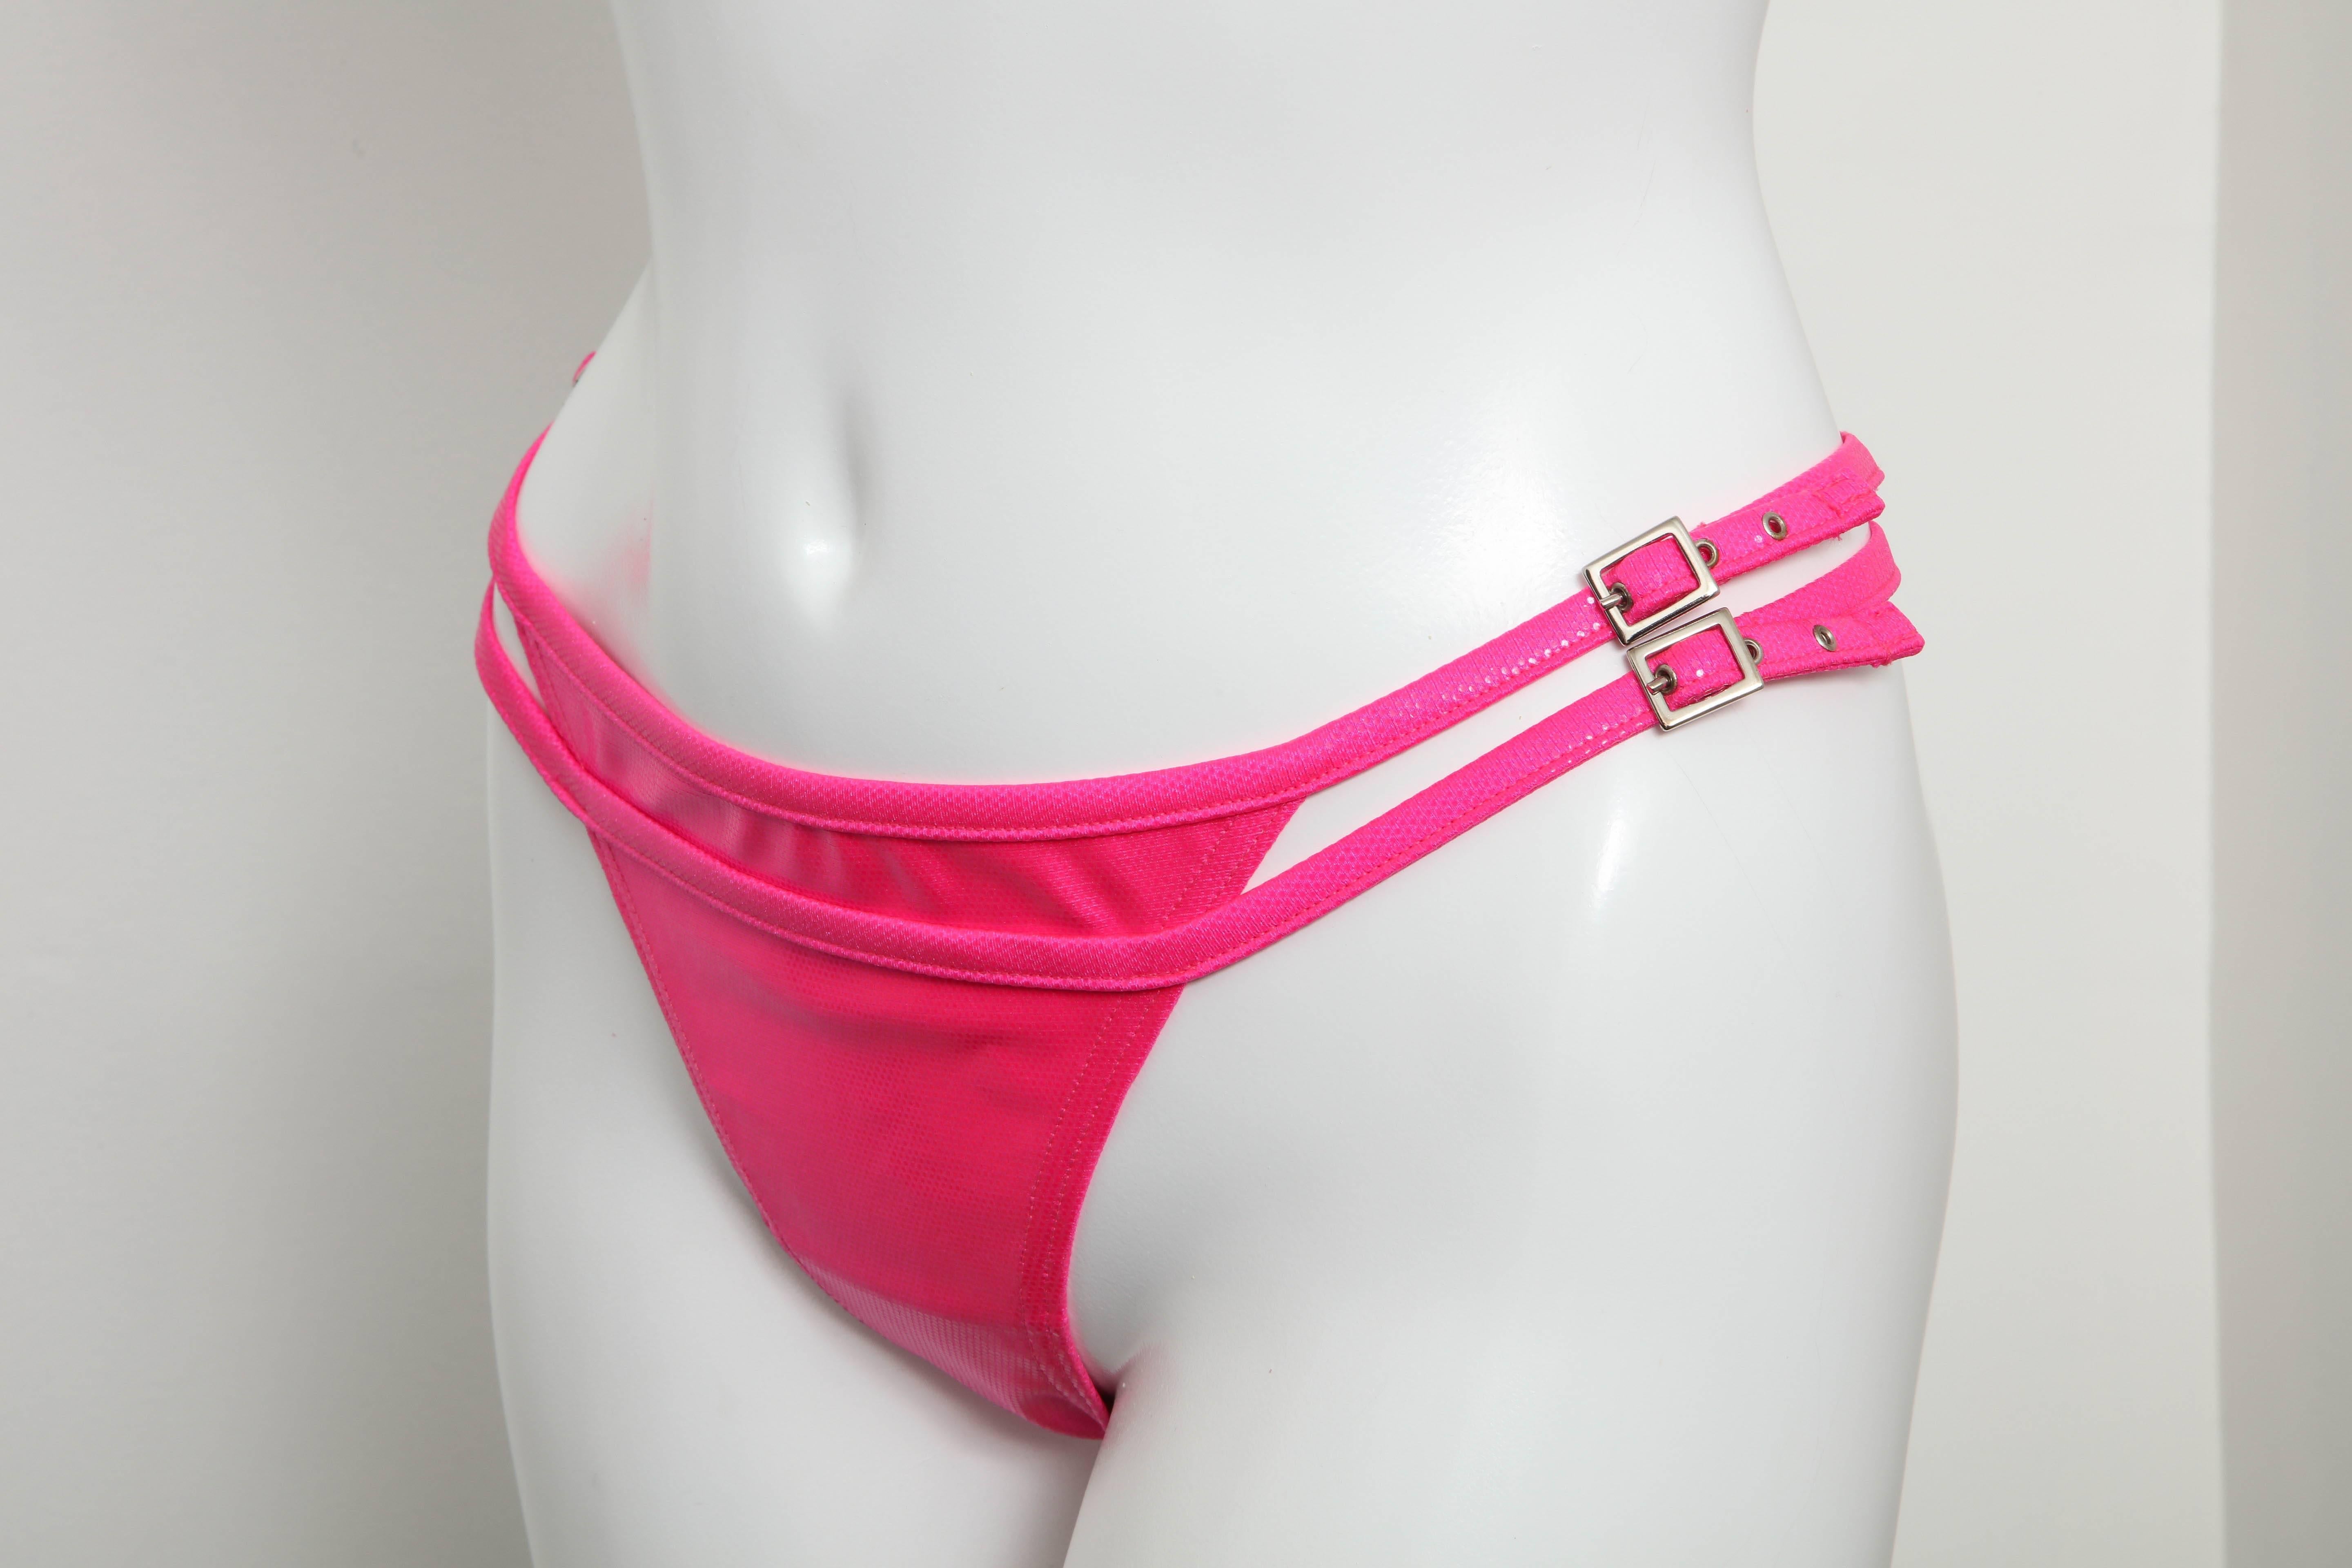 John Galliano for Christian Dior Pink Bikini In Excellent Condition For Sale In Chicago, IL